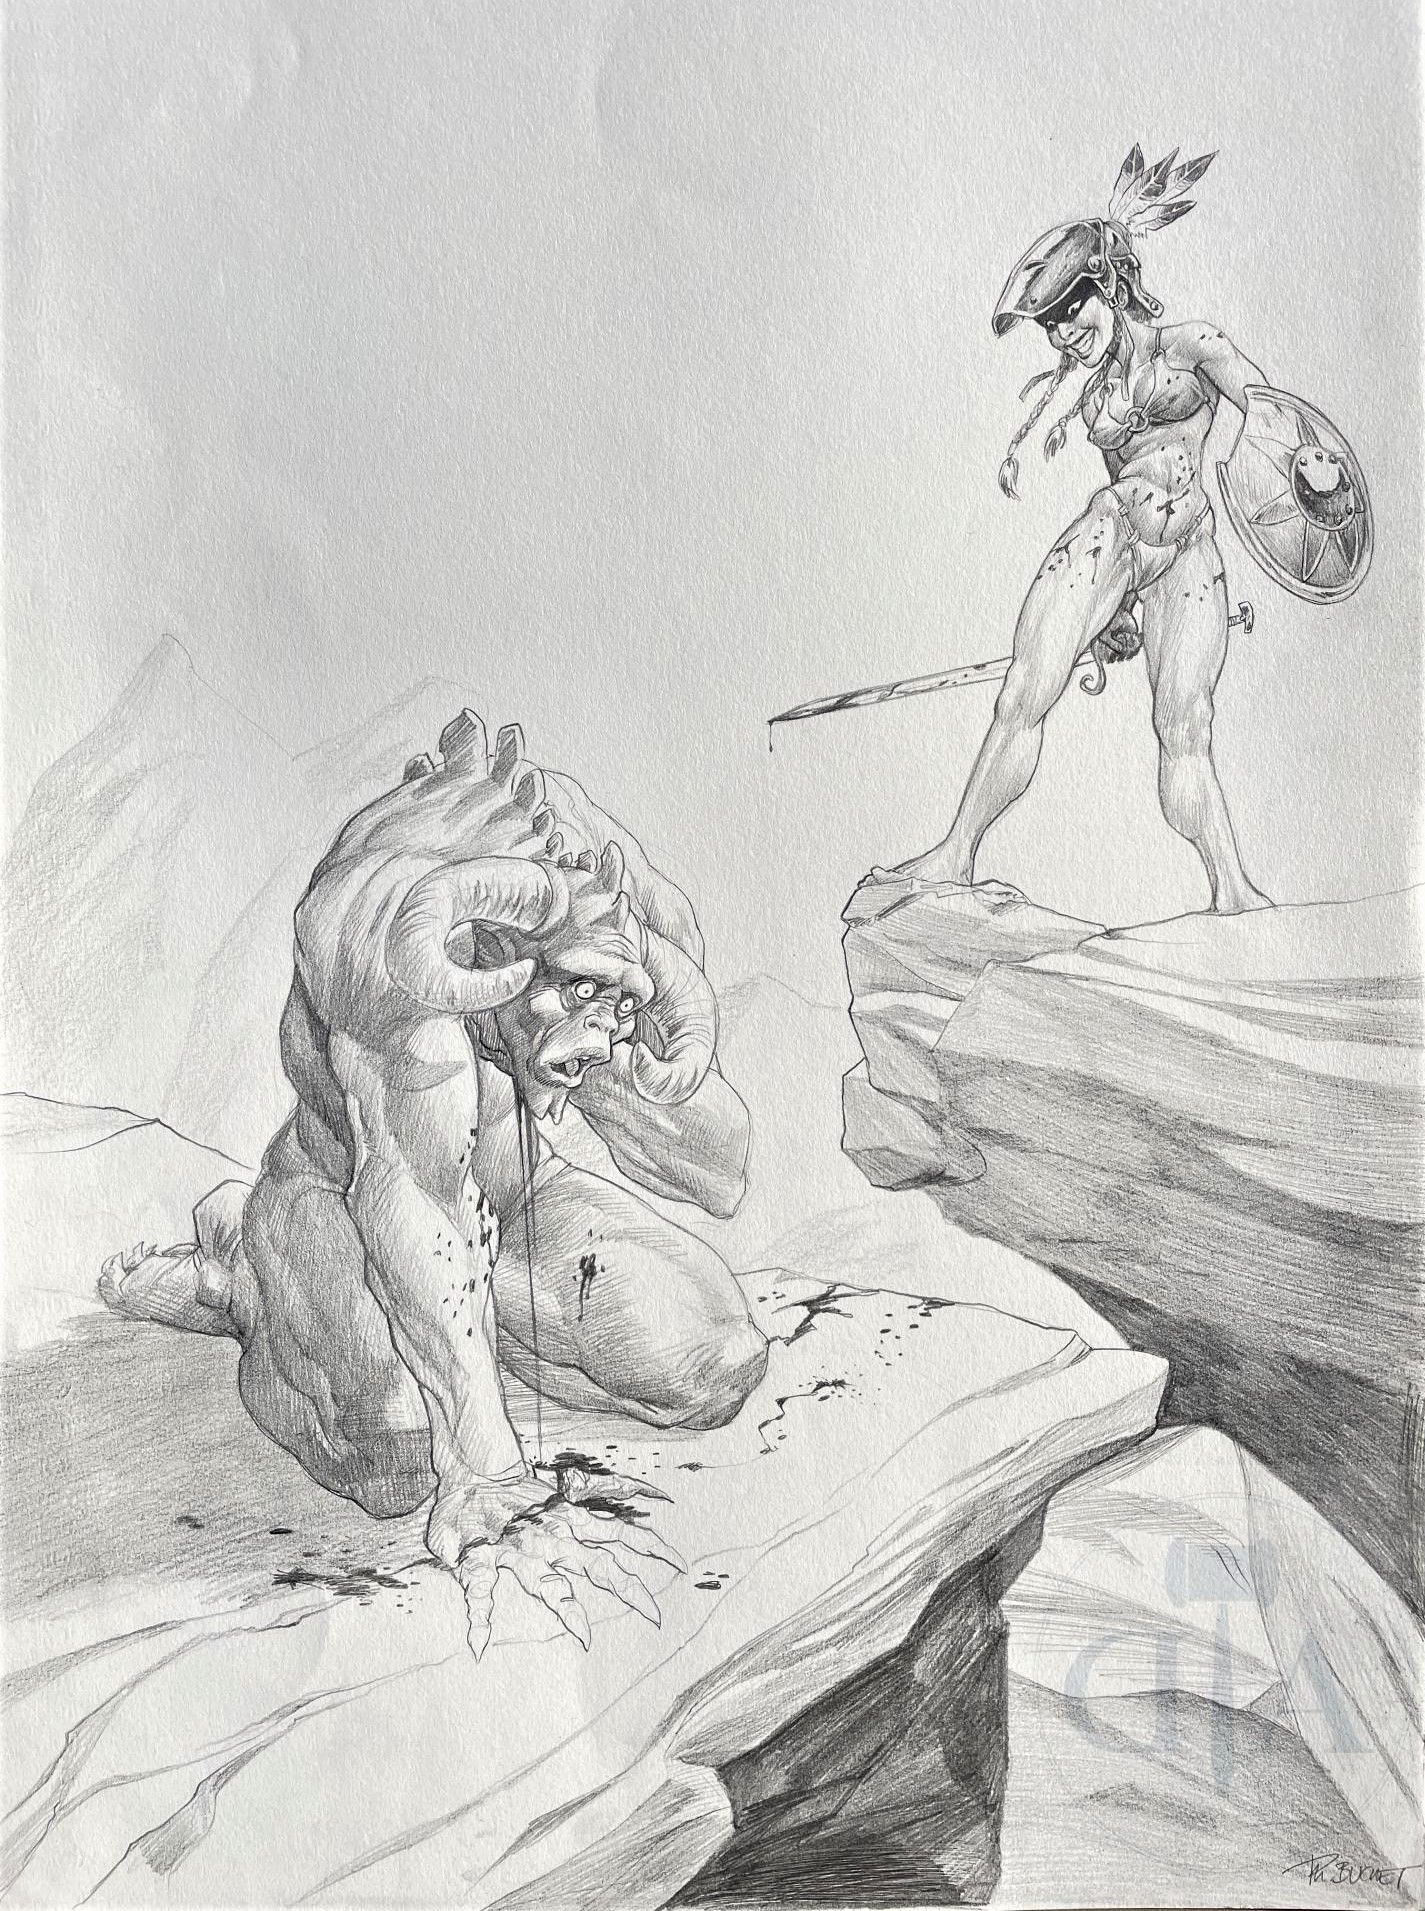 Null 
Buchet Philippe/Dibujo original que ilustra a una joven guerrera (¿Nävis?)&hellip;